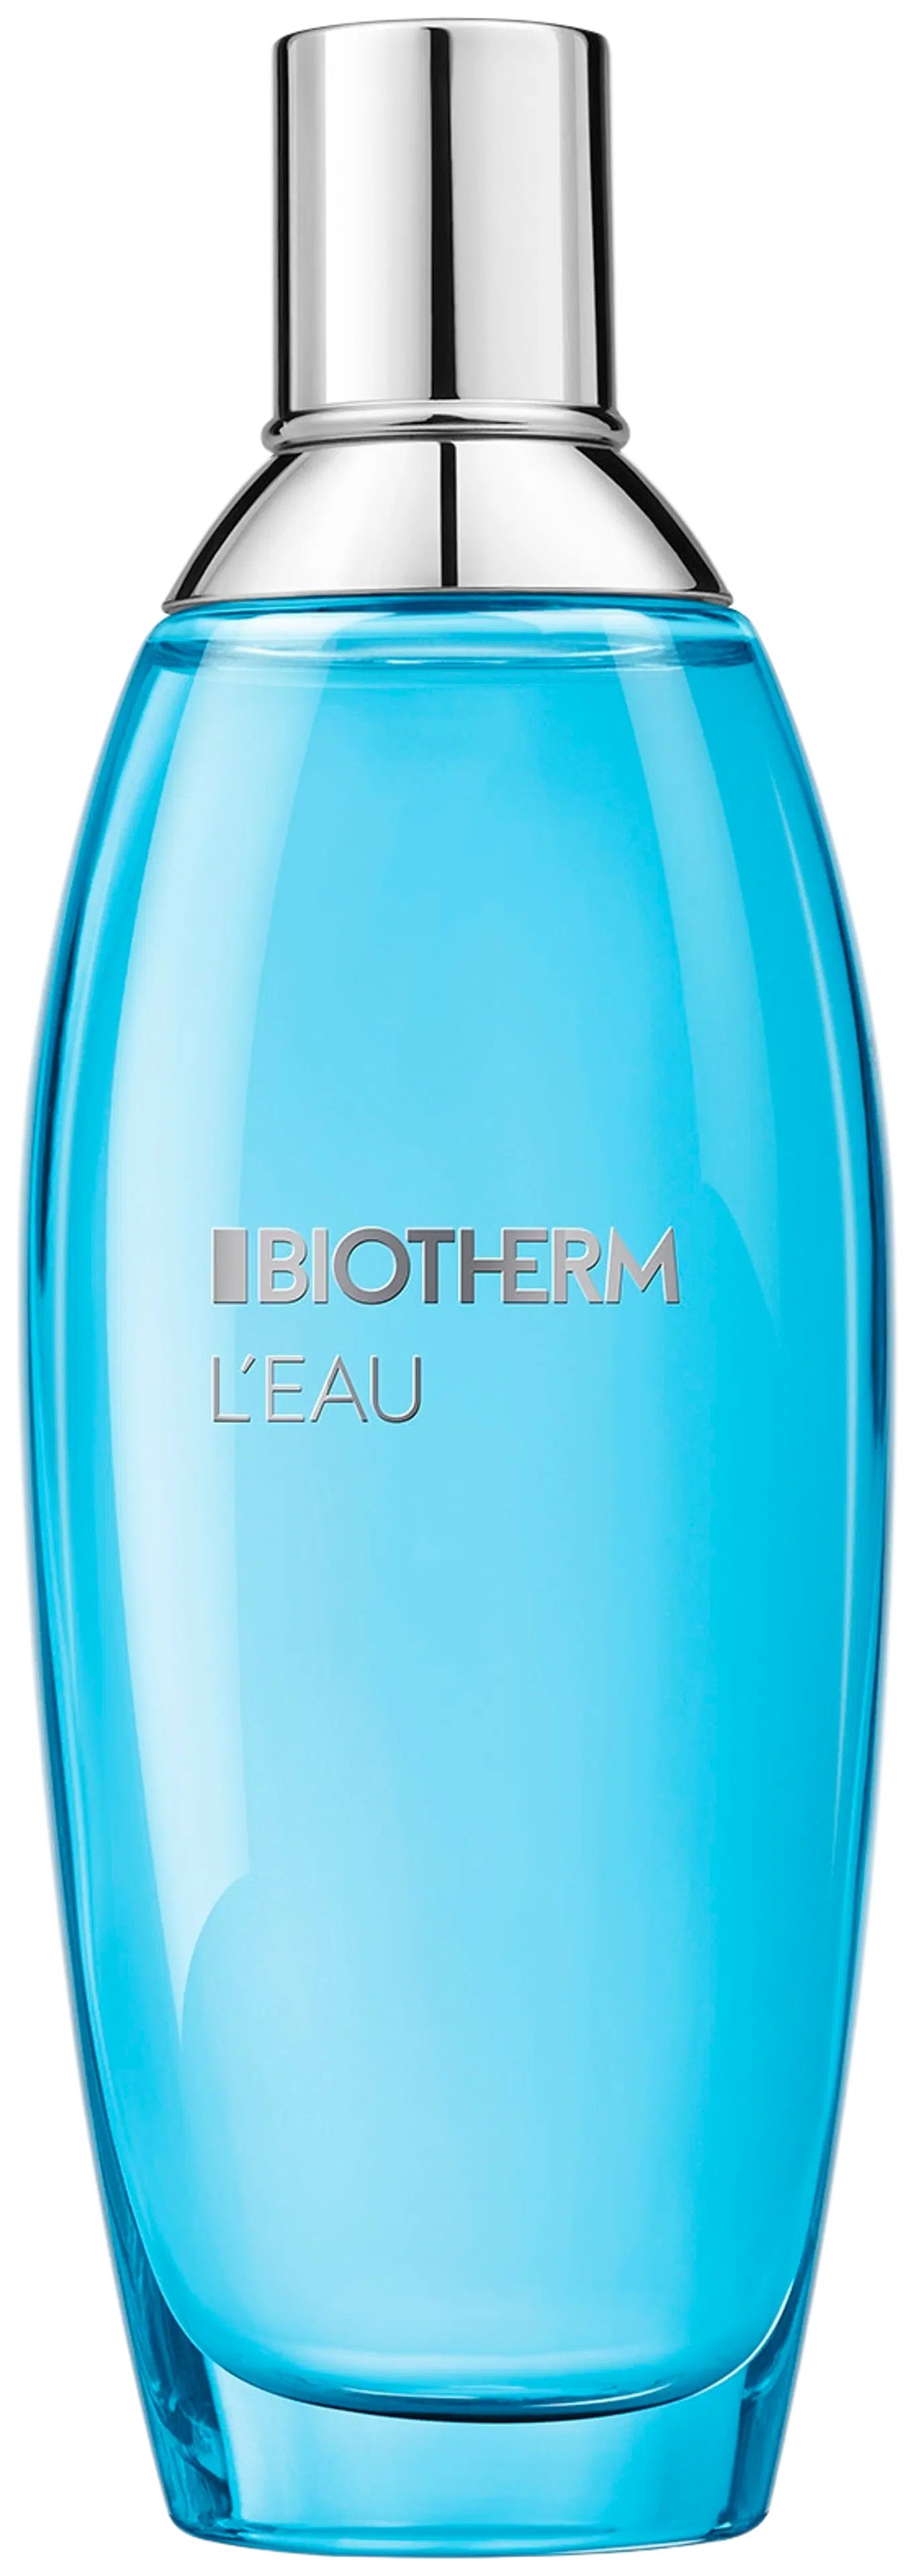 Biotherm L'Eau EdT vartalotuoksu 100 ml